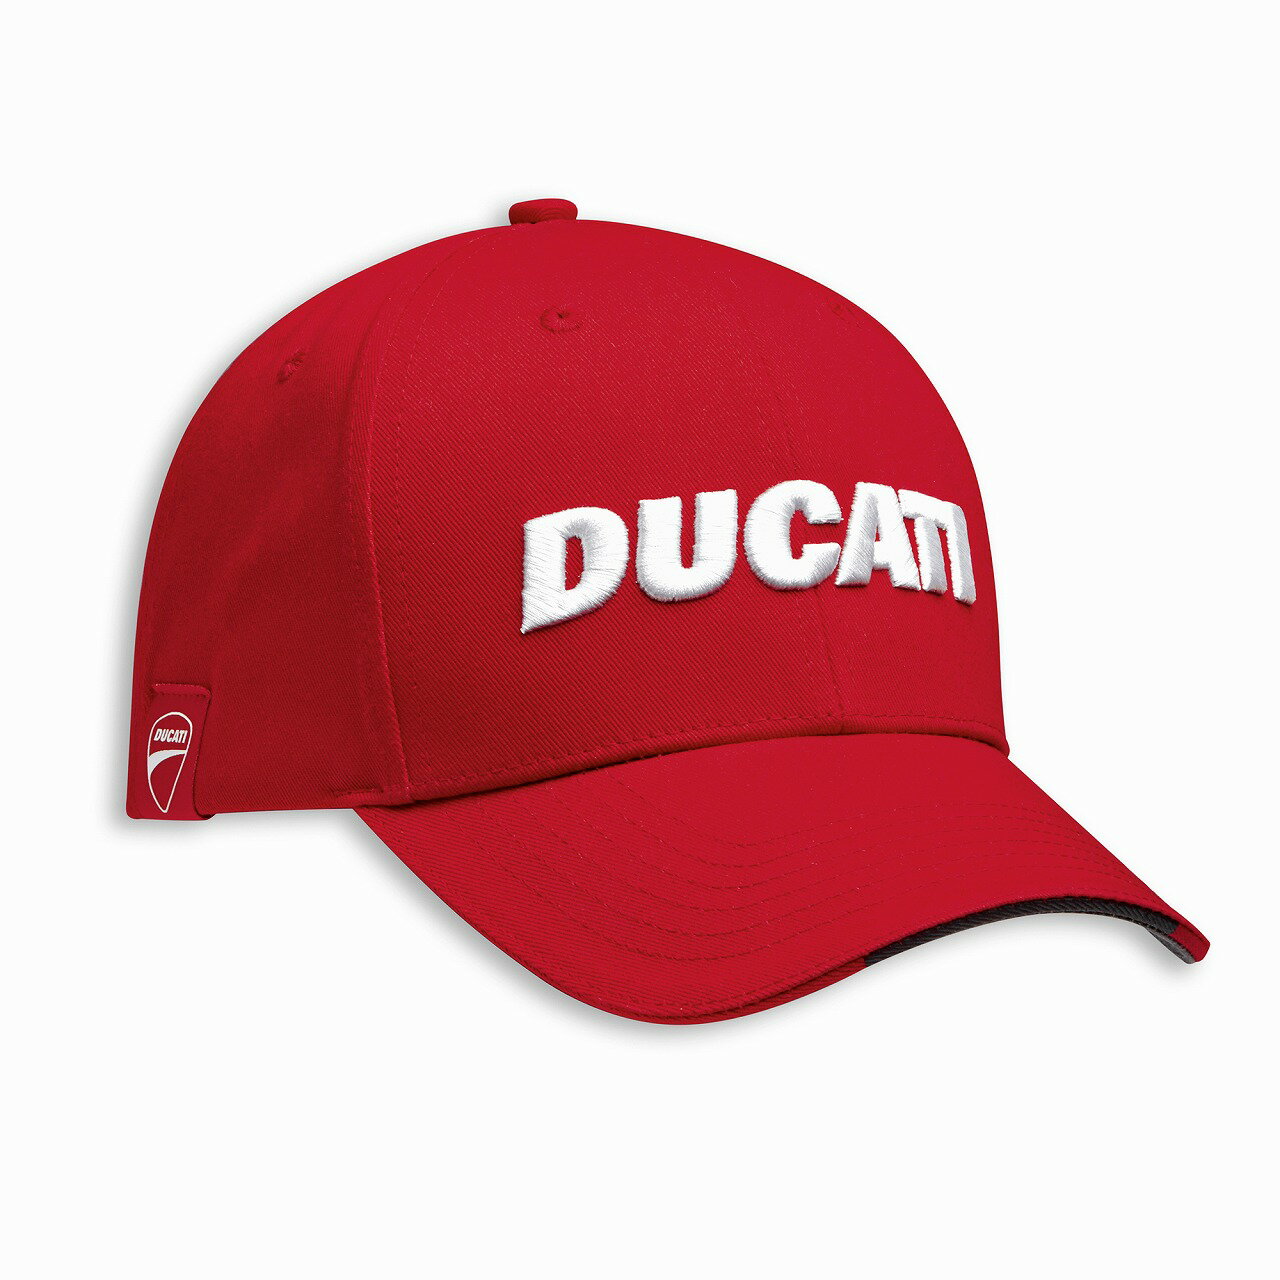 【DUCATI】《Company 2.0 キャップ 987701751/1752》ドゥカティアパレル 正規品 キャップ 帽子 日よけ 男女兼用 レッド